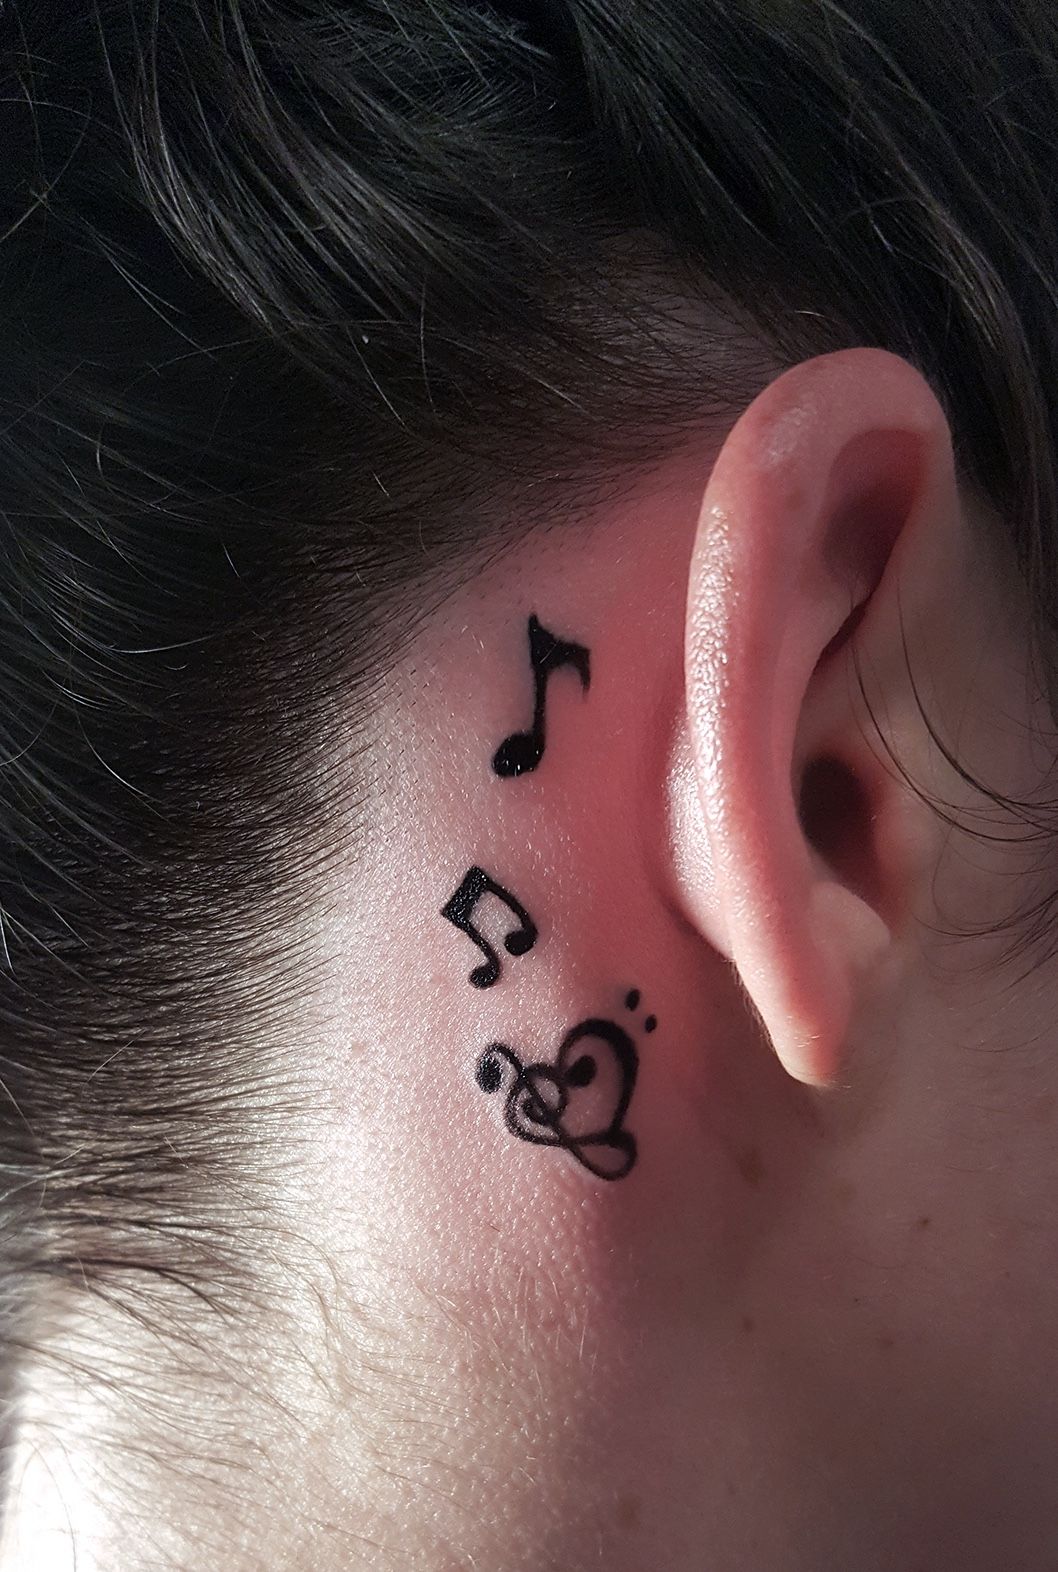 Ear Tattoo Ideas BehindtheEar Tattoos and More Photo Guide  TatRing